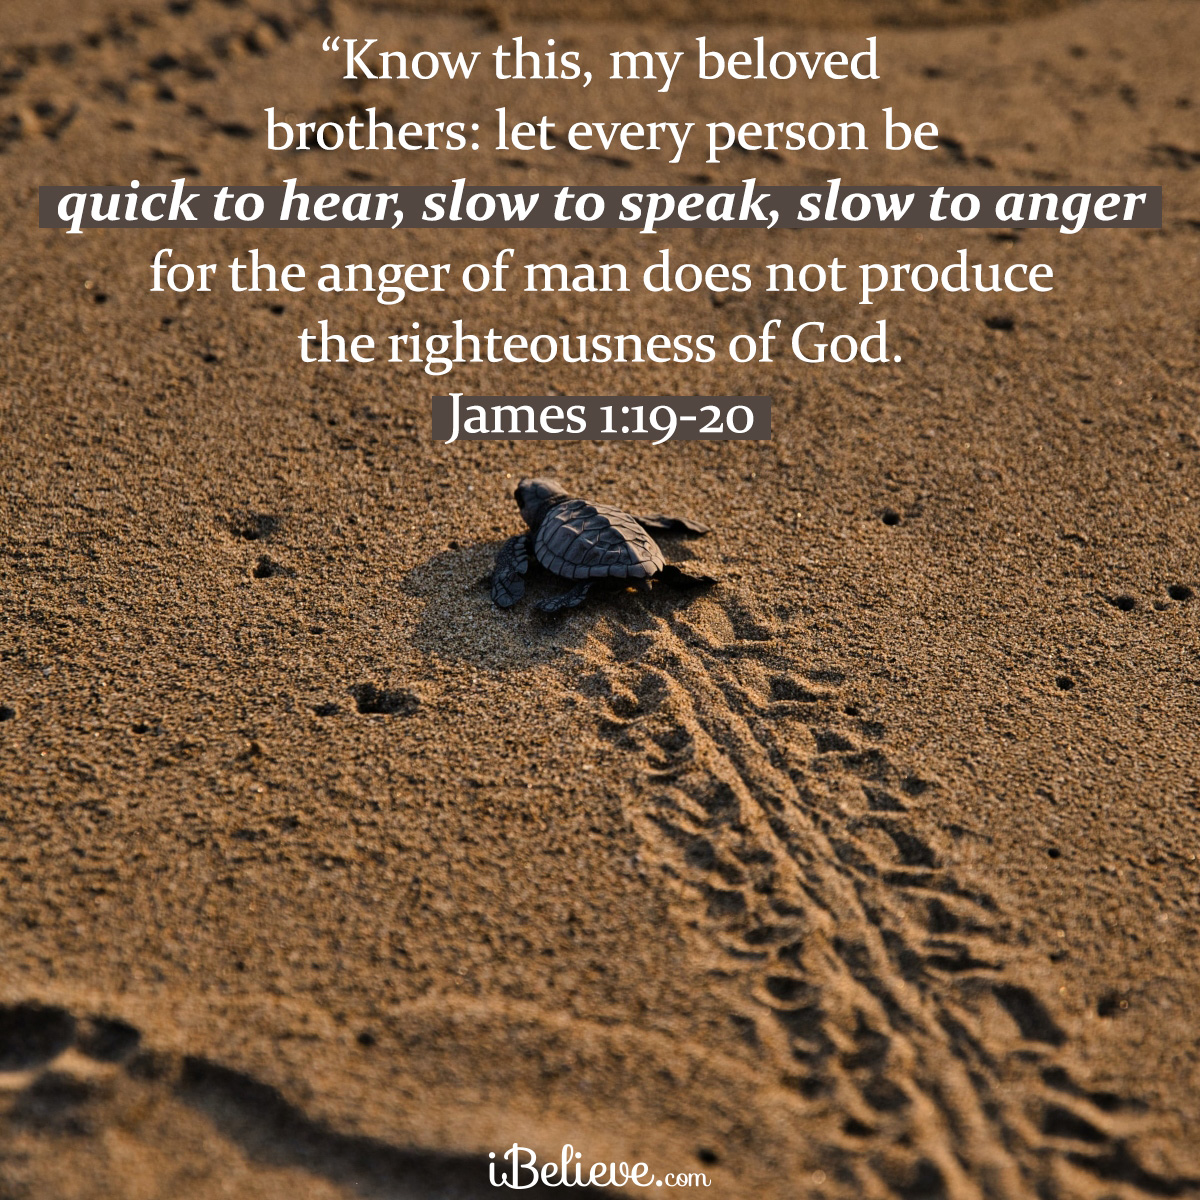 James 1:19-20, inspirational image